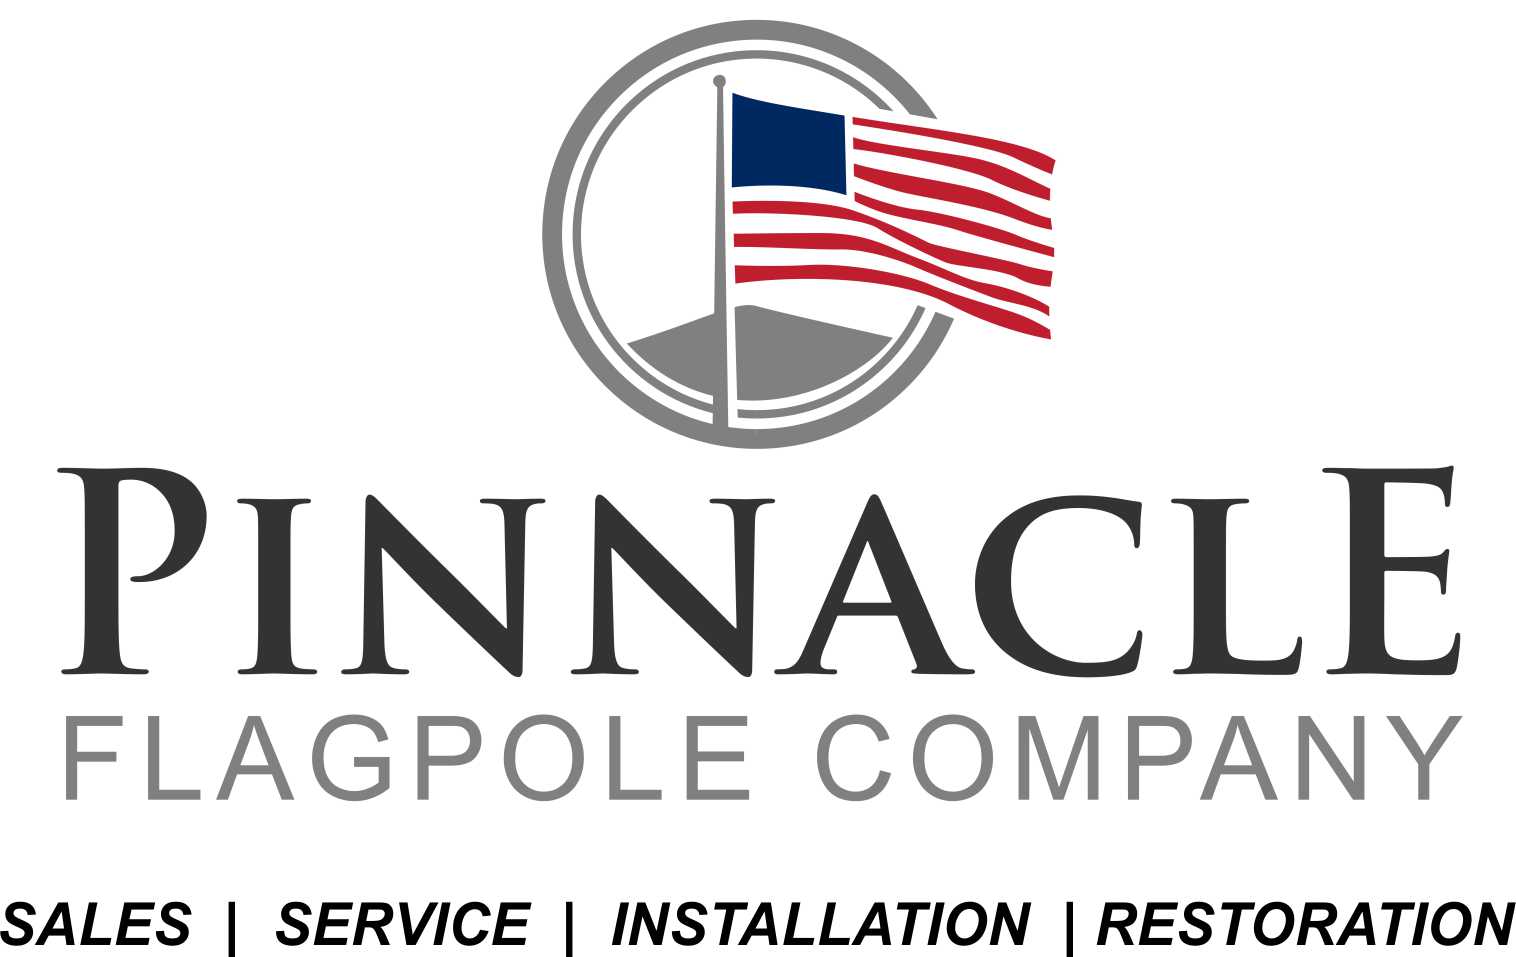 Pinnacle Flagpole Company